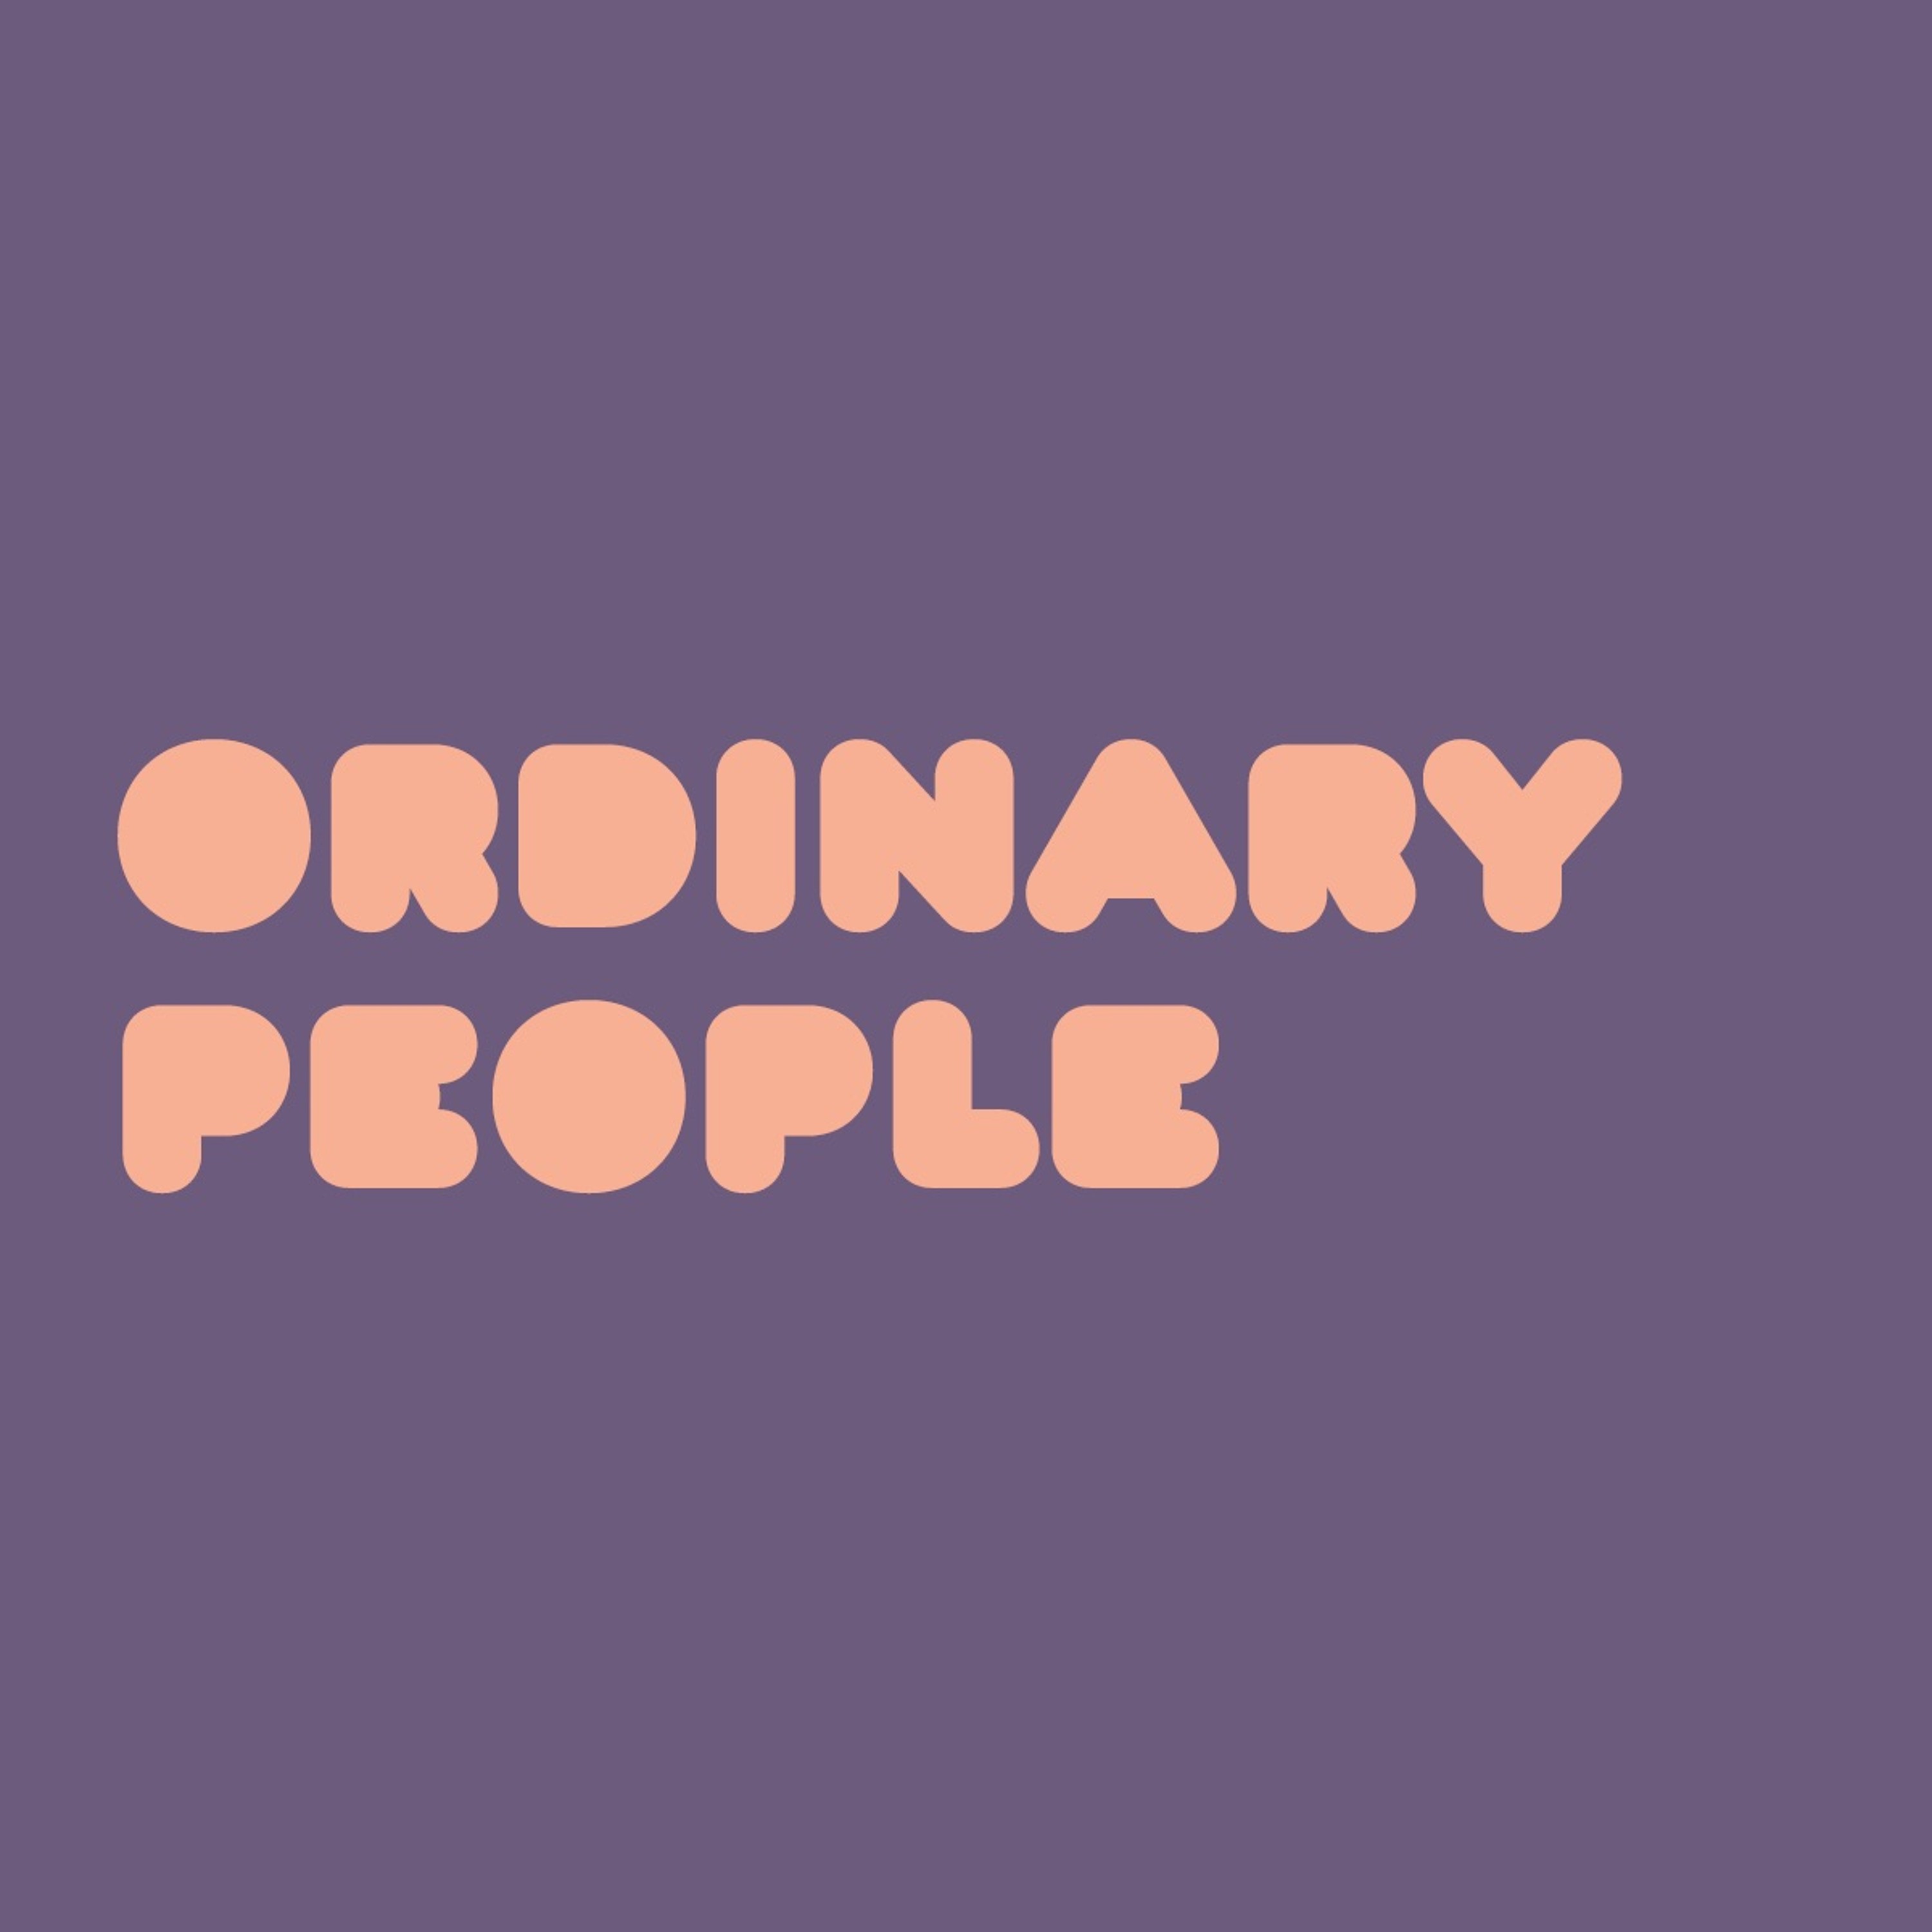 ’Ordinary People’ / Neil Dawson